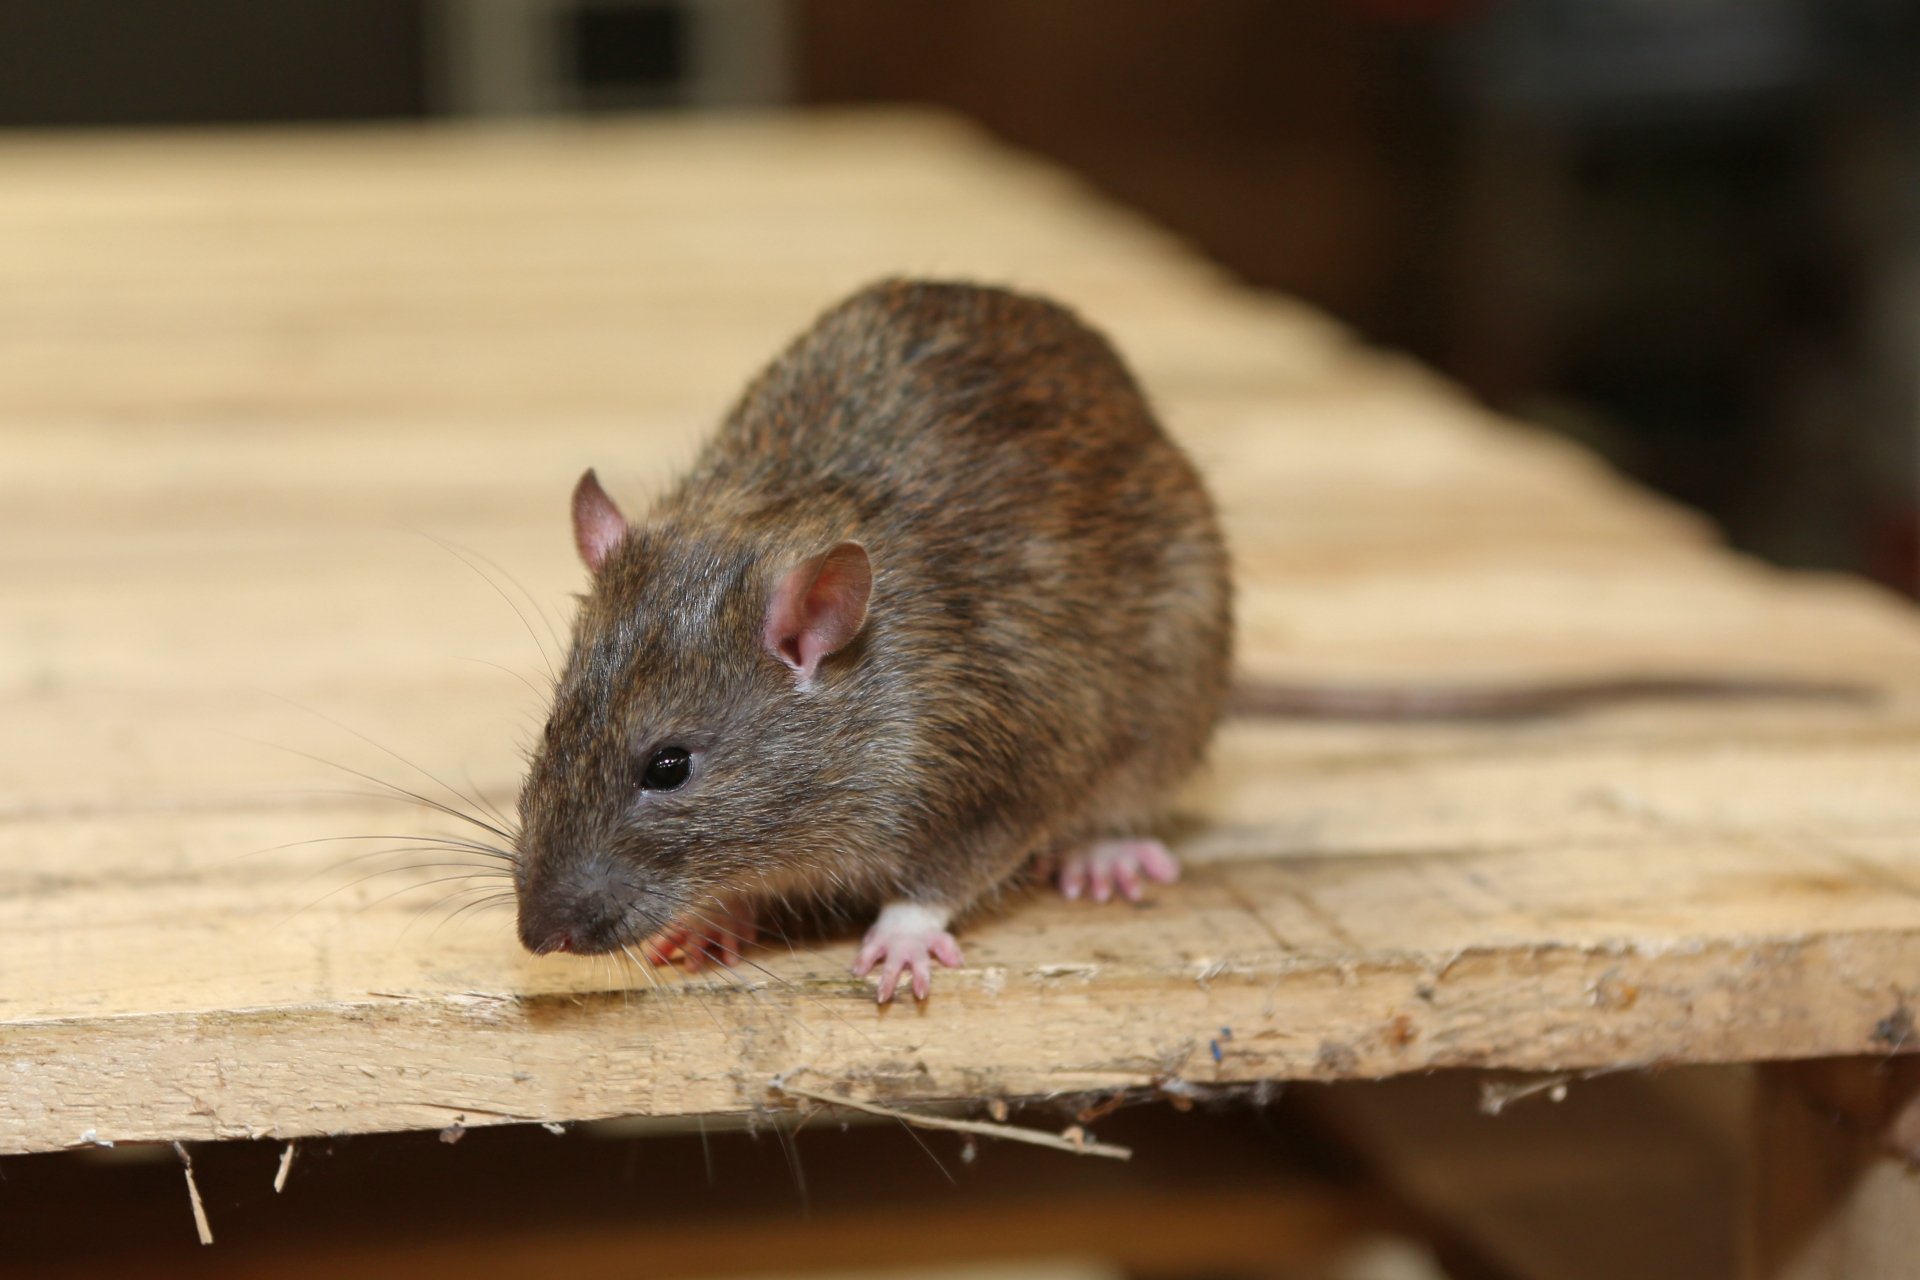 Rat extermination, Pest Control in Paddington, W2. Call Now 020 8166 9746